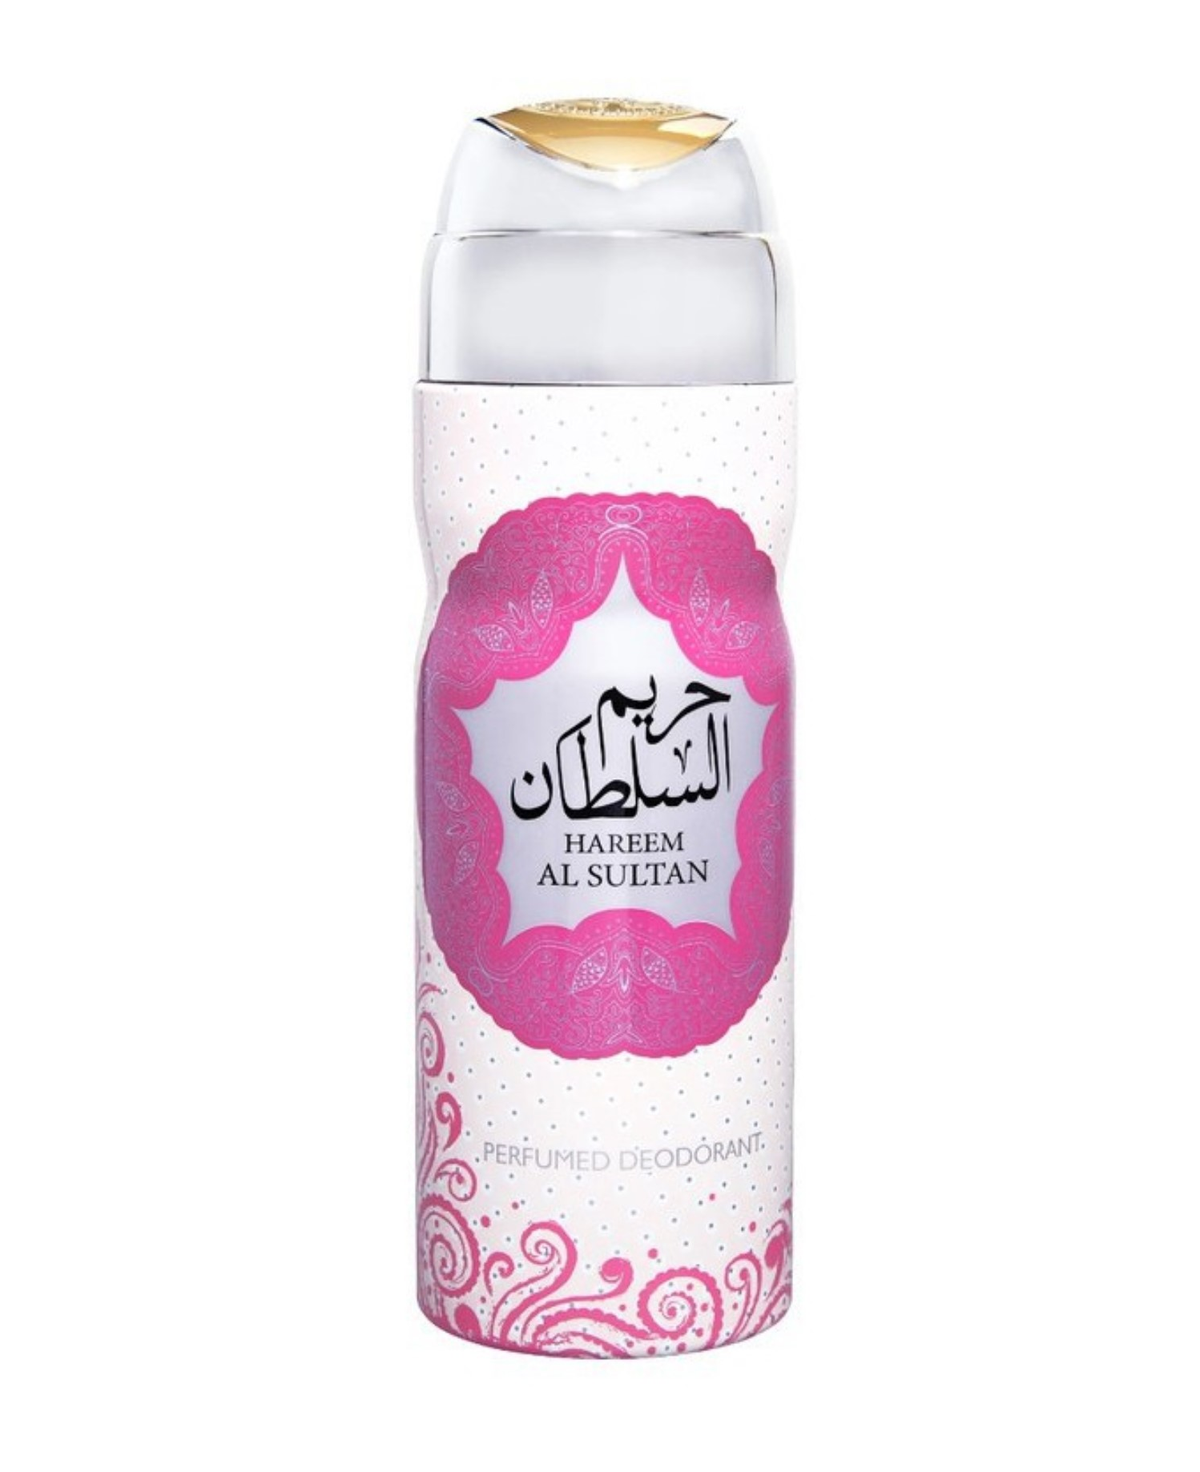 Hareem Al Sultan 200 ml body spray deodorant by Ard al Zaafaran